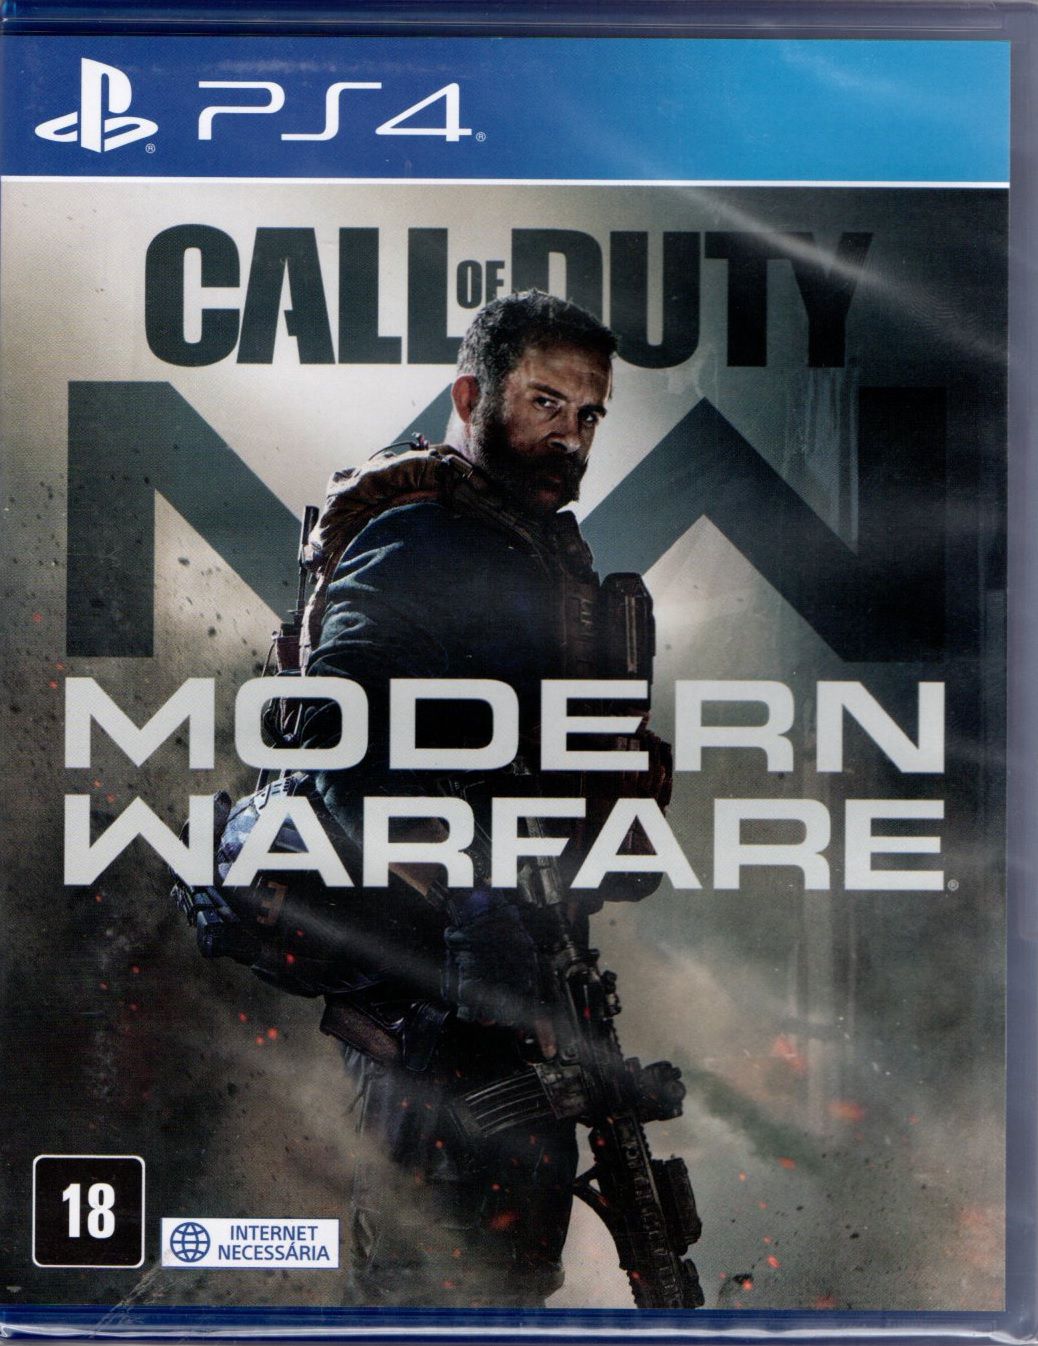 Call Of Duty Advanced Warfare - Xbox 360 (Mídia Física) - Seminovo